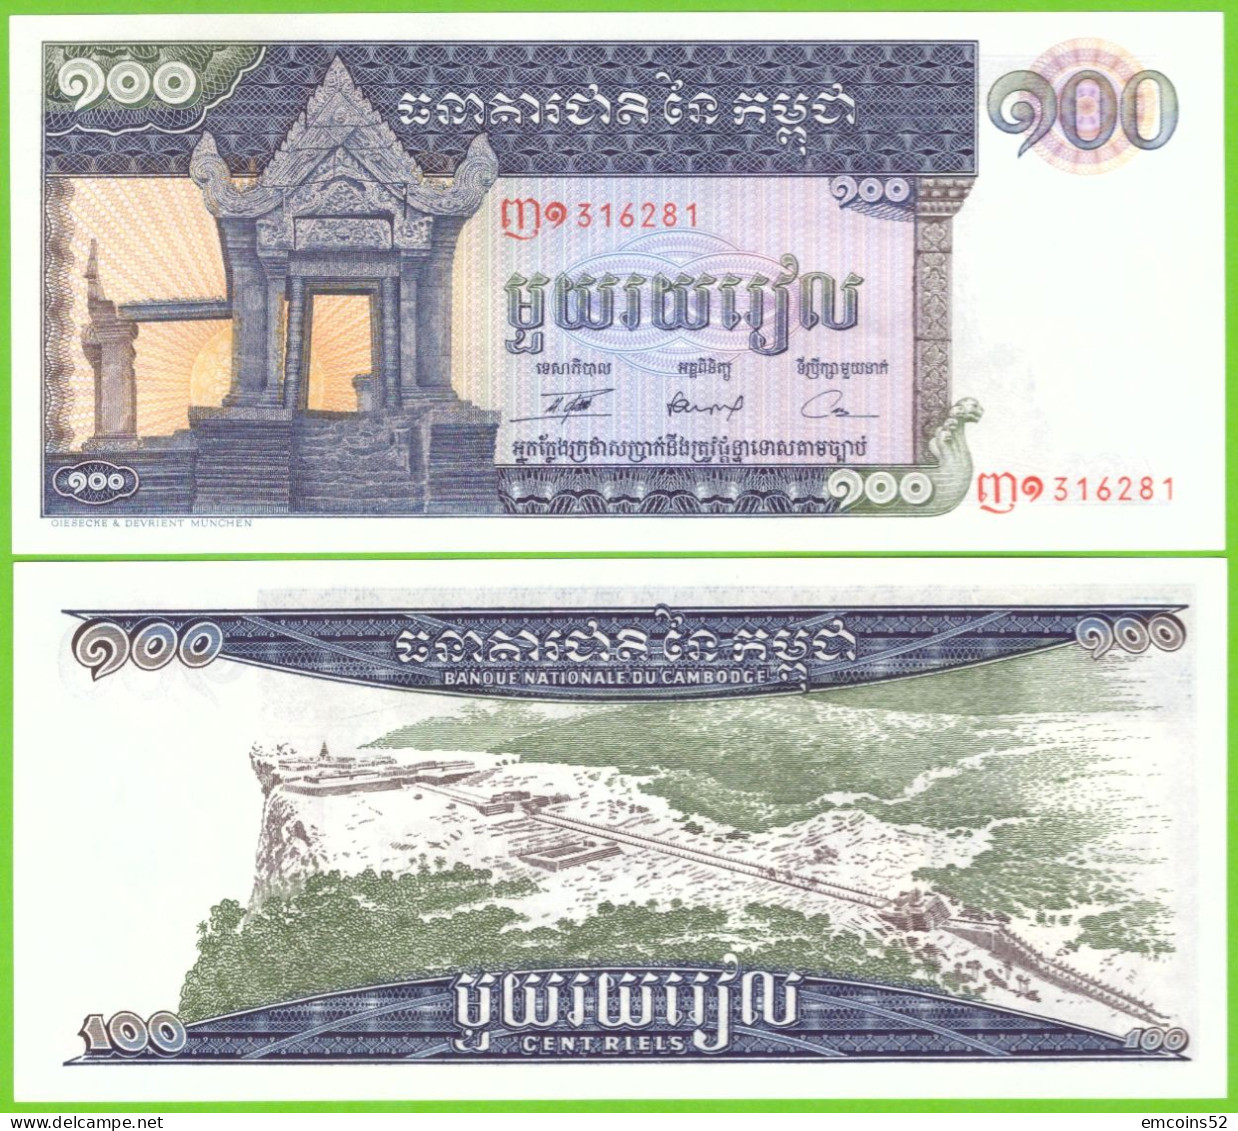 CAMBODIA  100 RIELS ND 1963/1972 P-12b  UNC - Cambodge